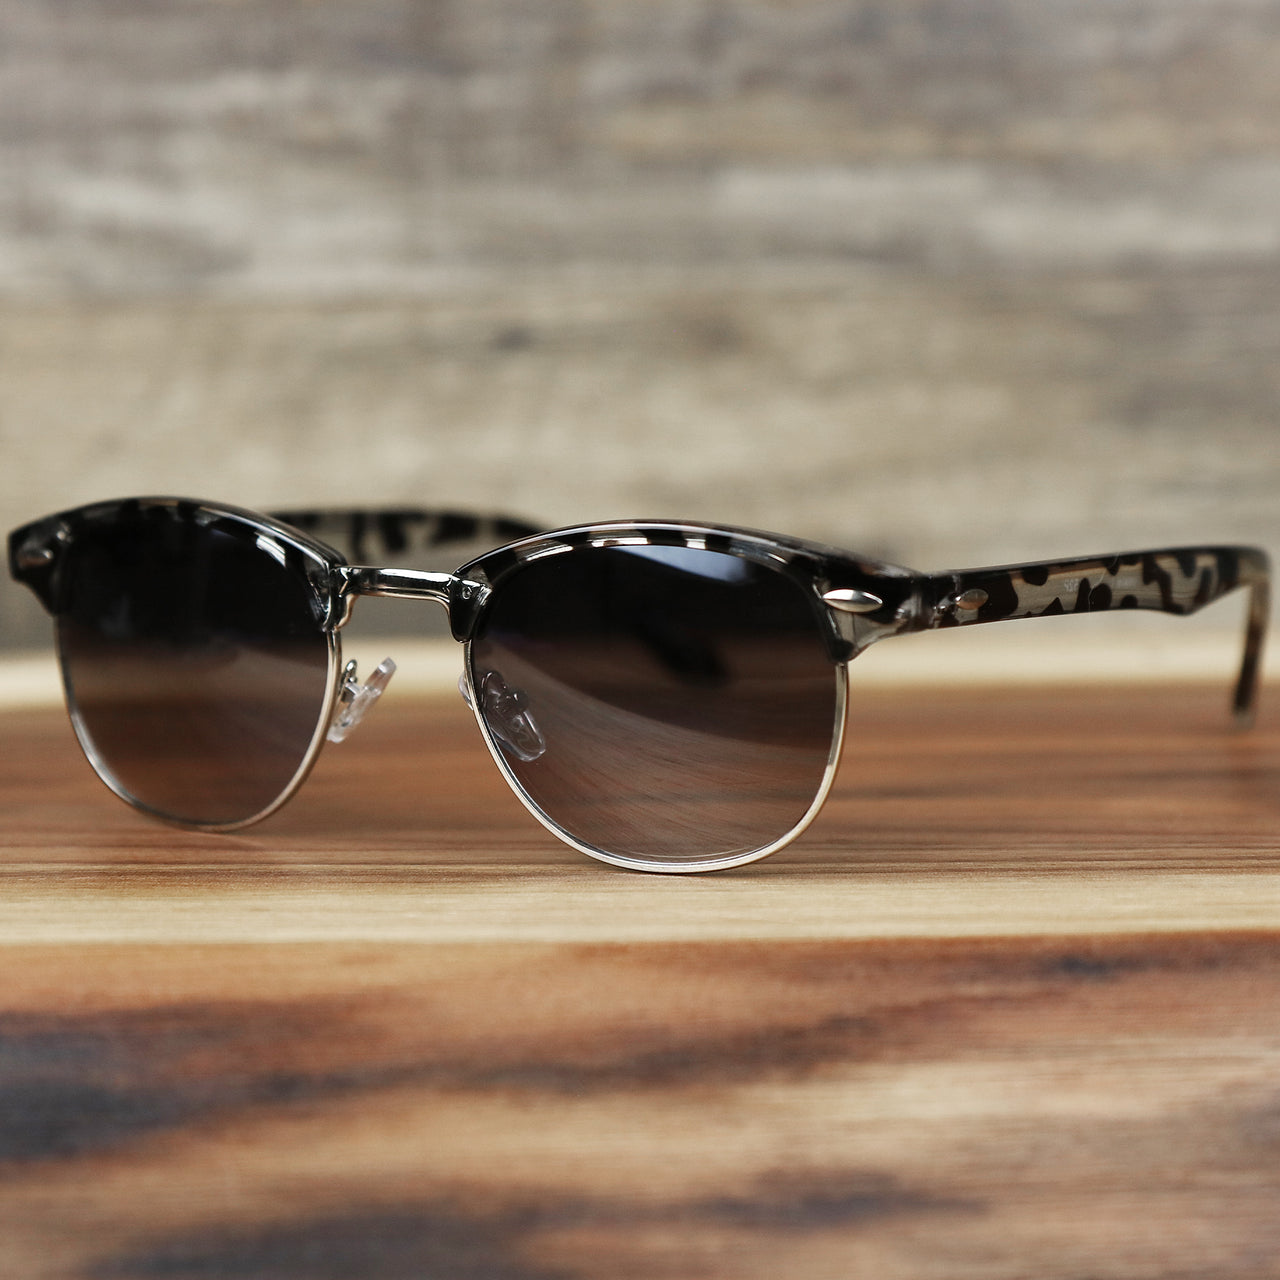 The Round Frame Black Gradient Lens Sunglasses with Black Tortoise Silver Frame